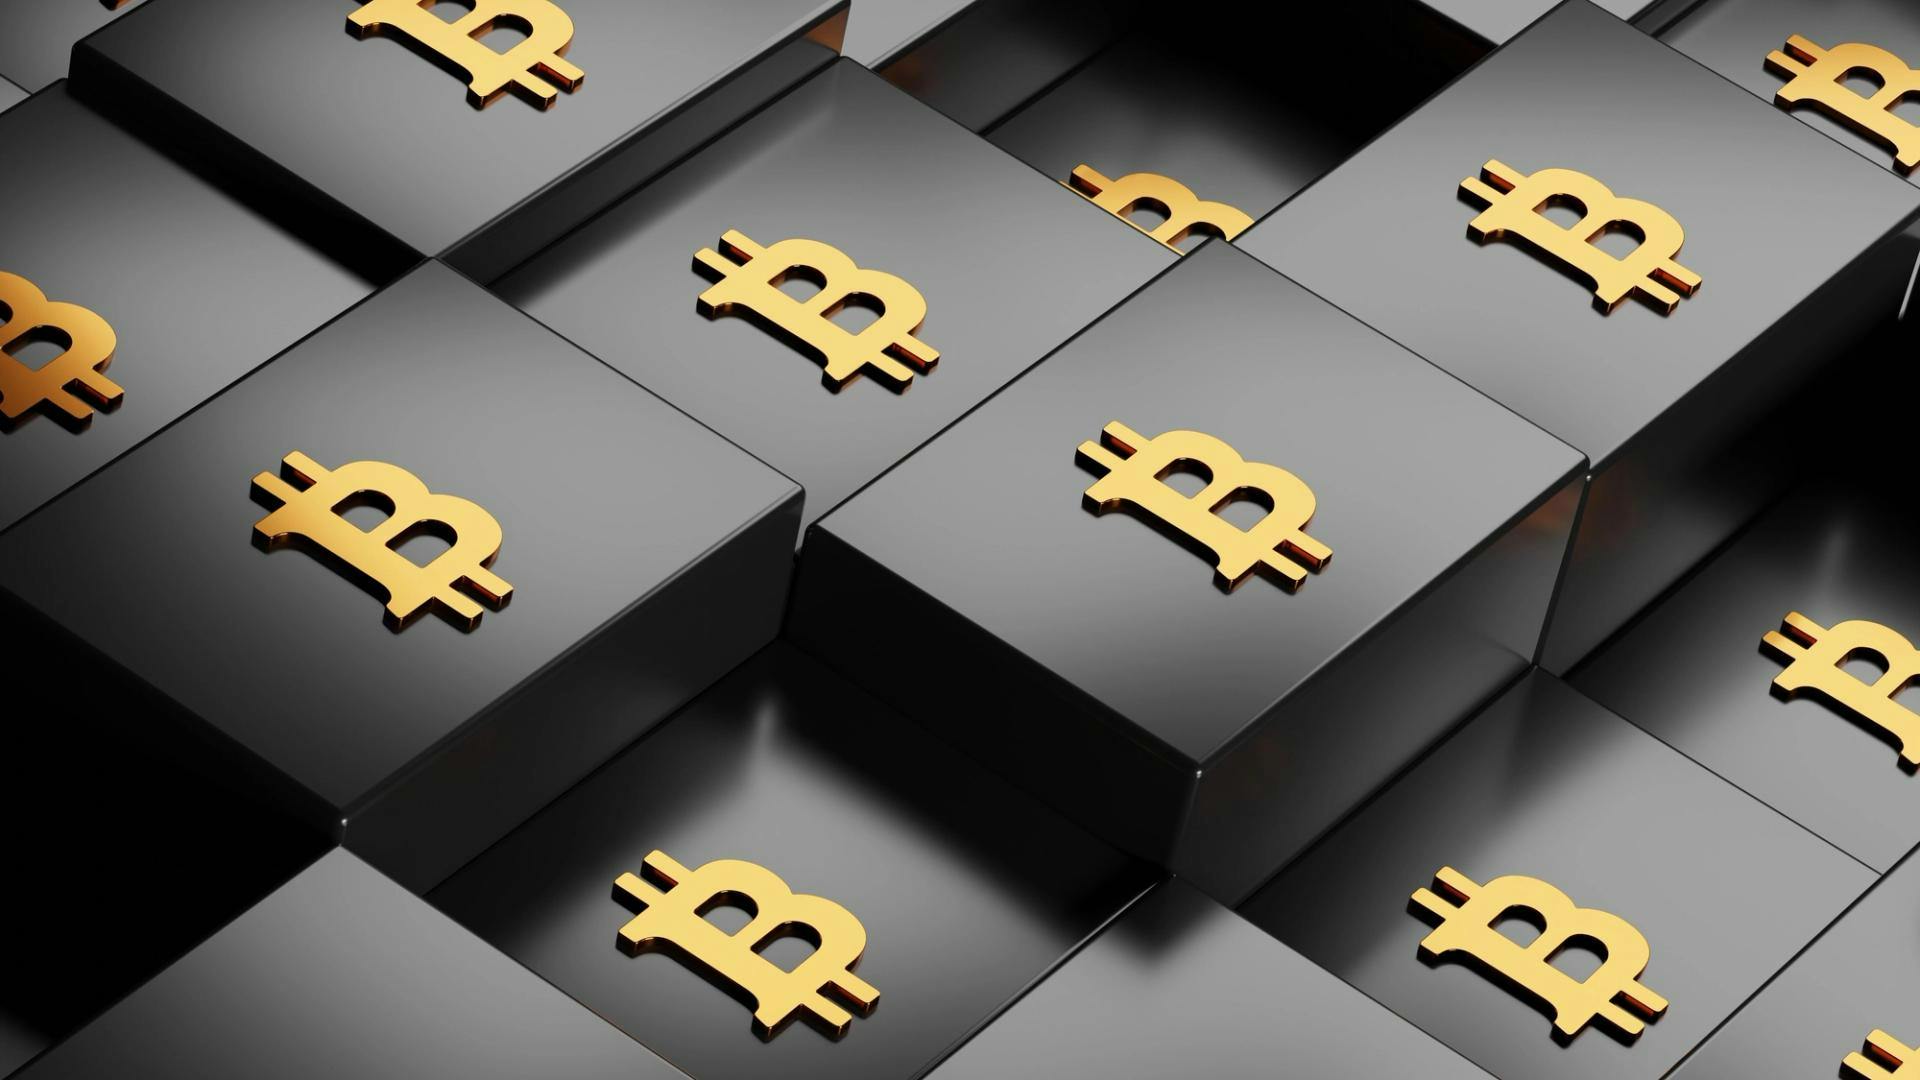 Bitcoin logos on a pile of black boxes.